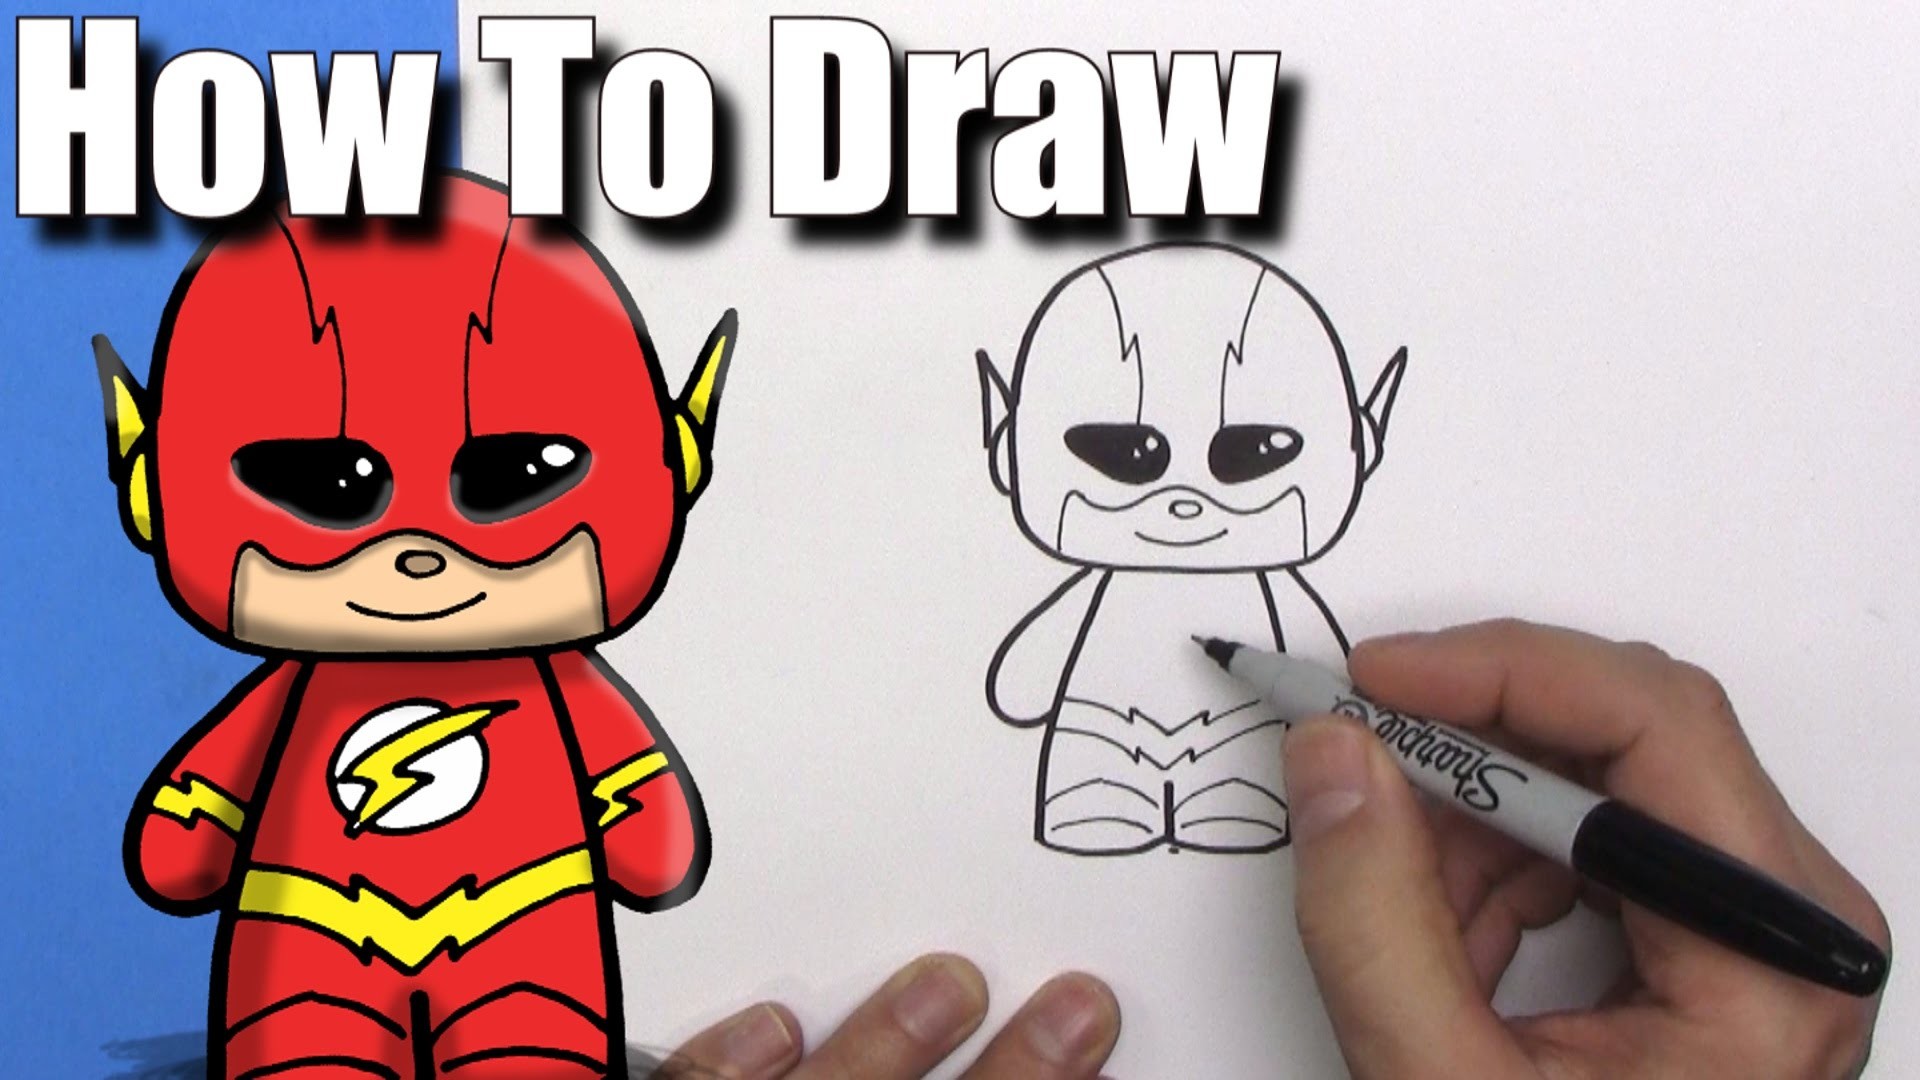 1920x1080 How To Draw a Cute Cartoon The Flash - EASY Chibi - Step By Step - Kawaii -  YouTube